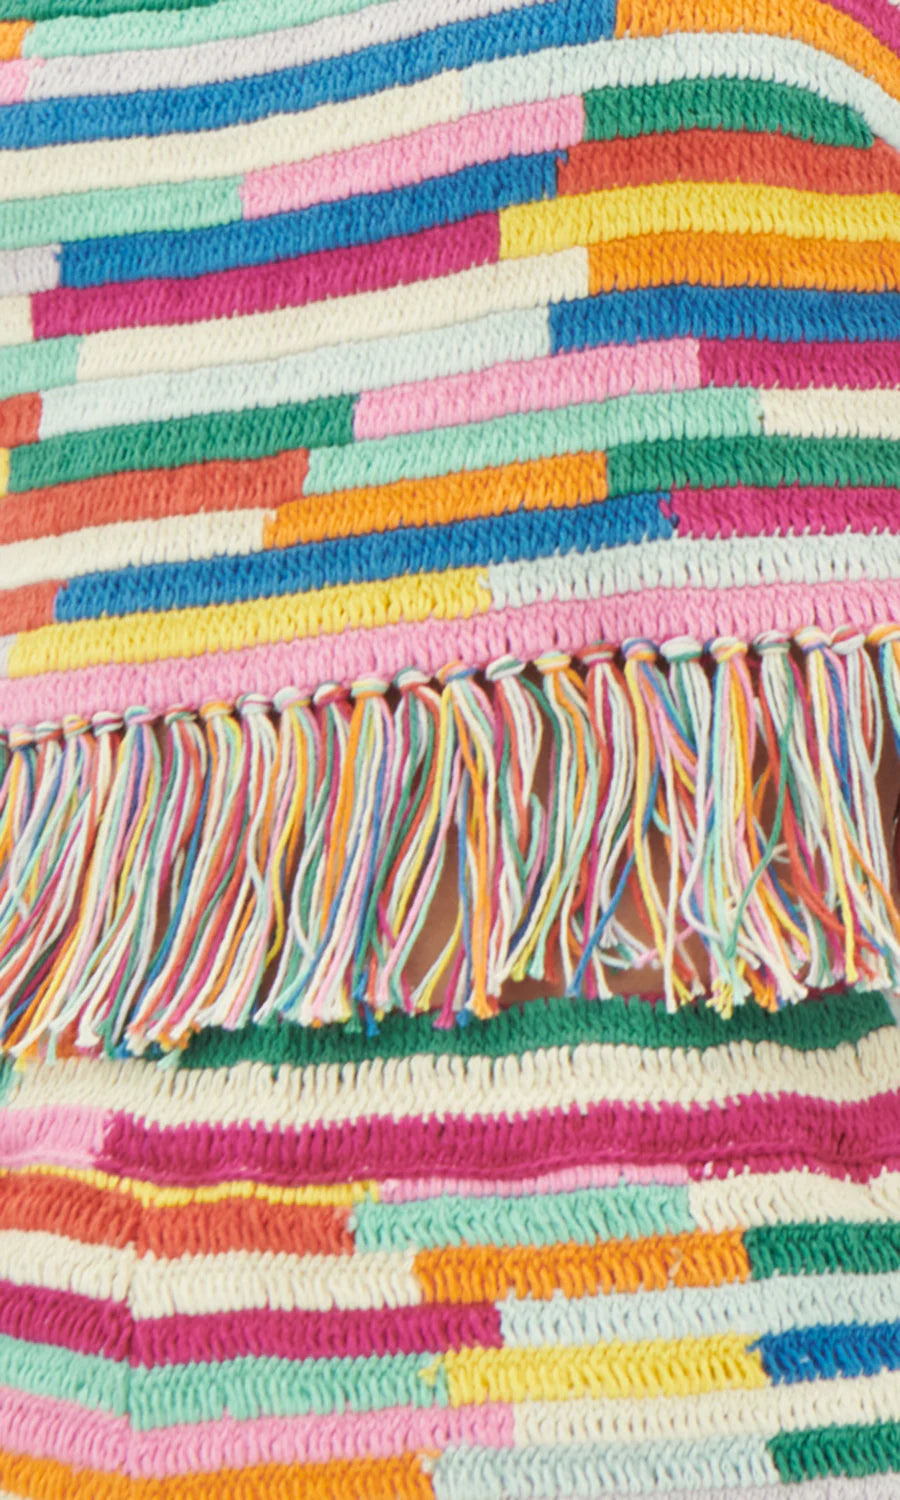 Saylor Gwendoline Embroidered Set in Rainbow Stripe Crochet